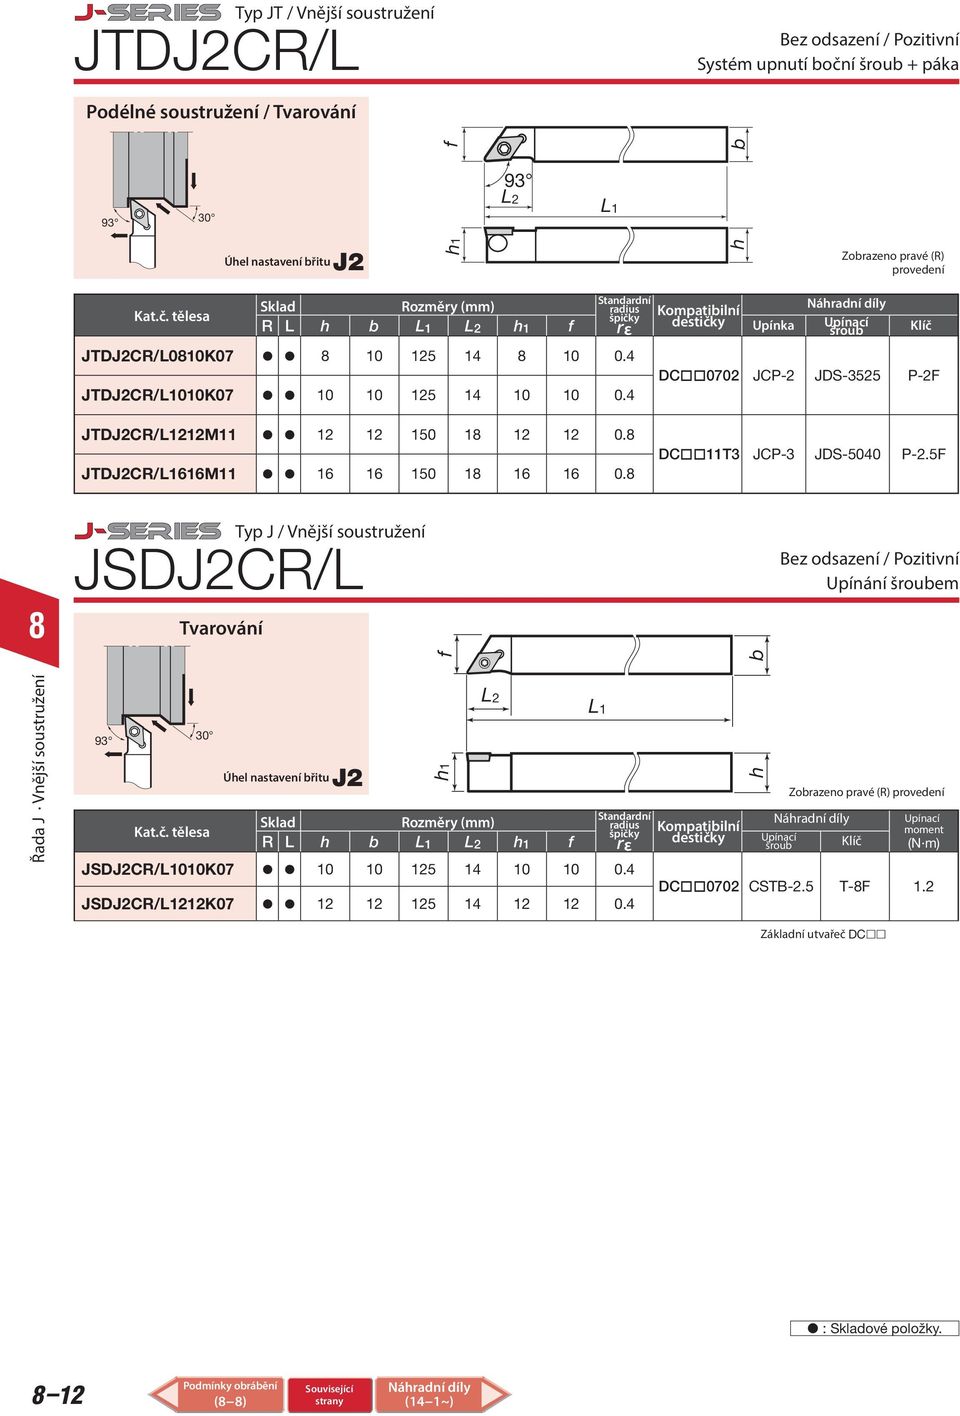 JTDJ2CR/616M11 16 16 150 1 16 16 0. DC11T3 JCP-3 JDS-5040 P-2.